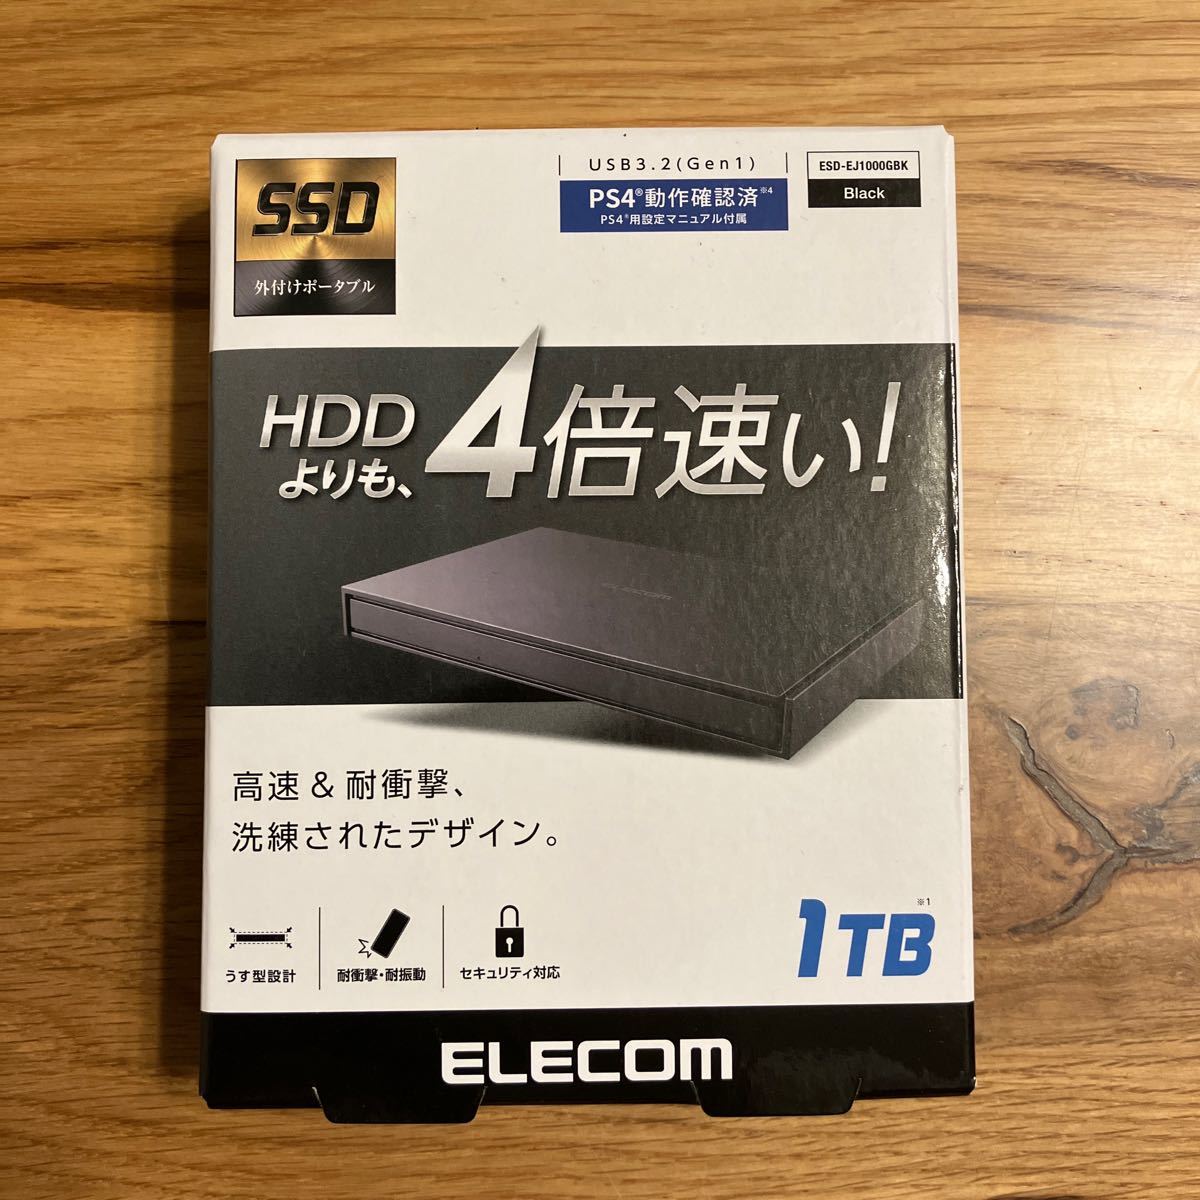 PC/タブレット PC周辺機器 ELECOM SSD 1TB | www.myglobaltax.com